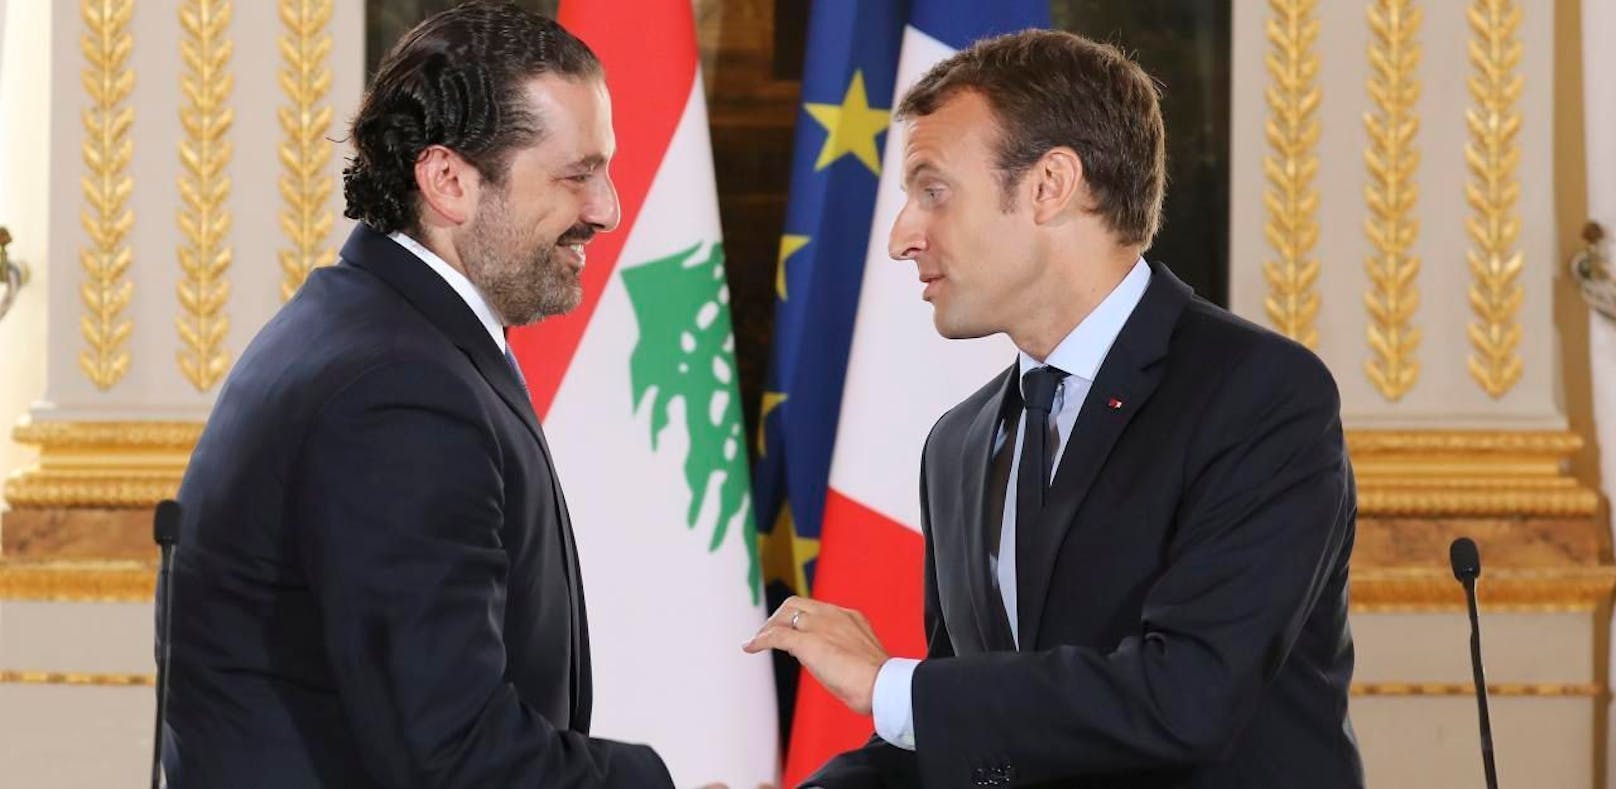 Emmanuel Macron im Gespräch mit Saad Hariri